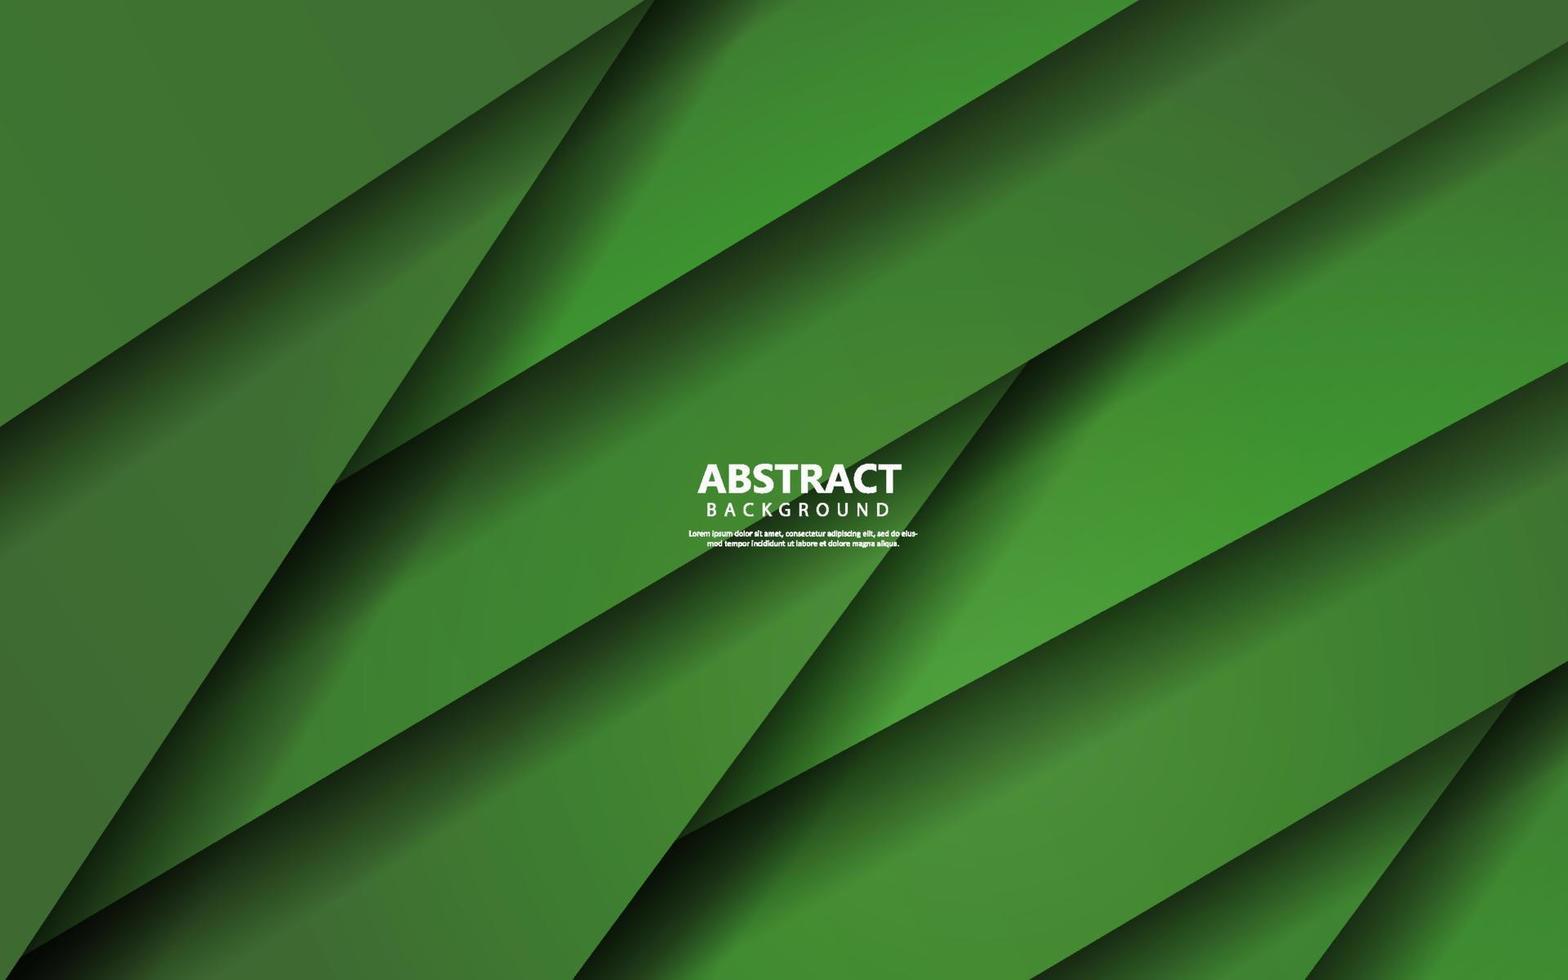 abstracte groene ovale laag achtergrond vector